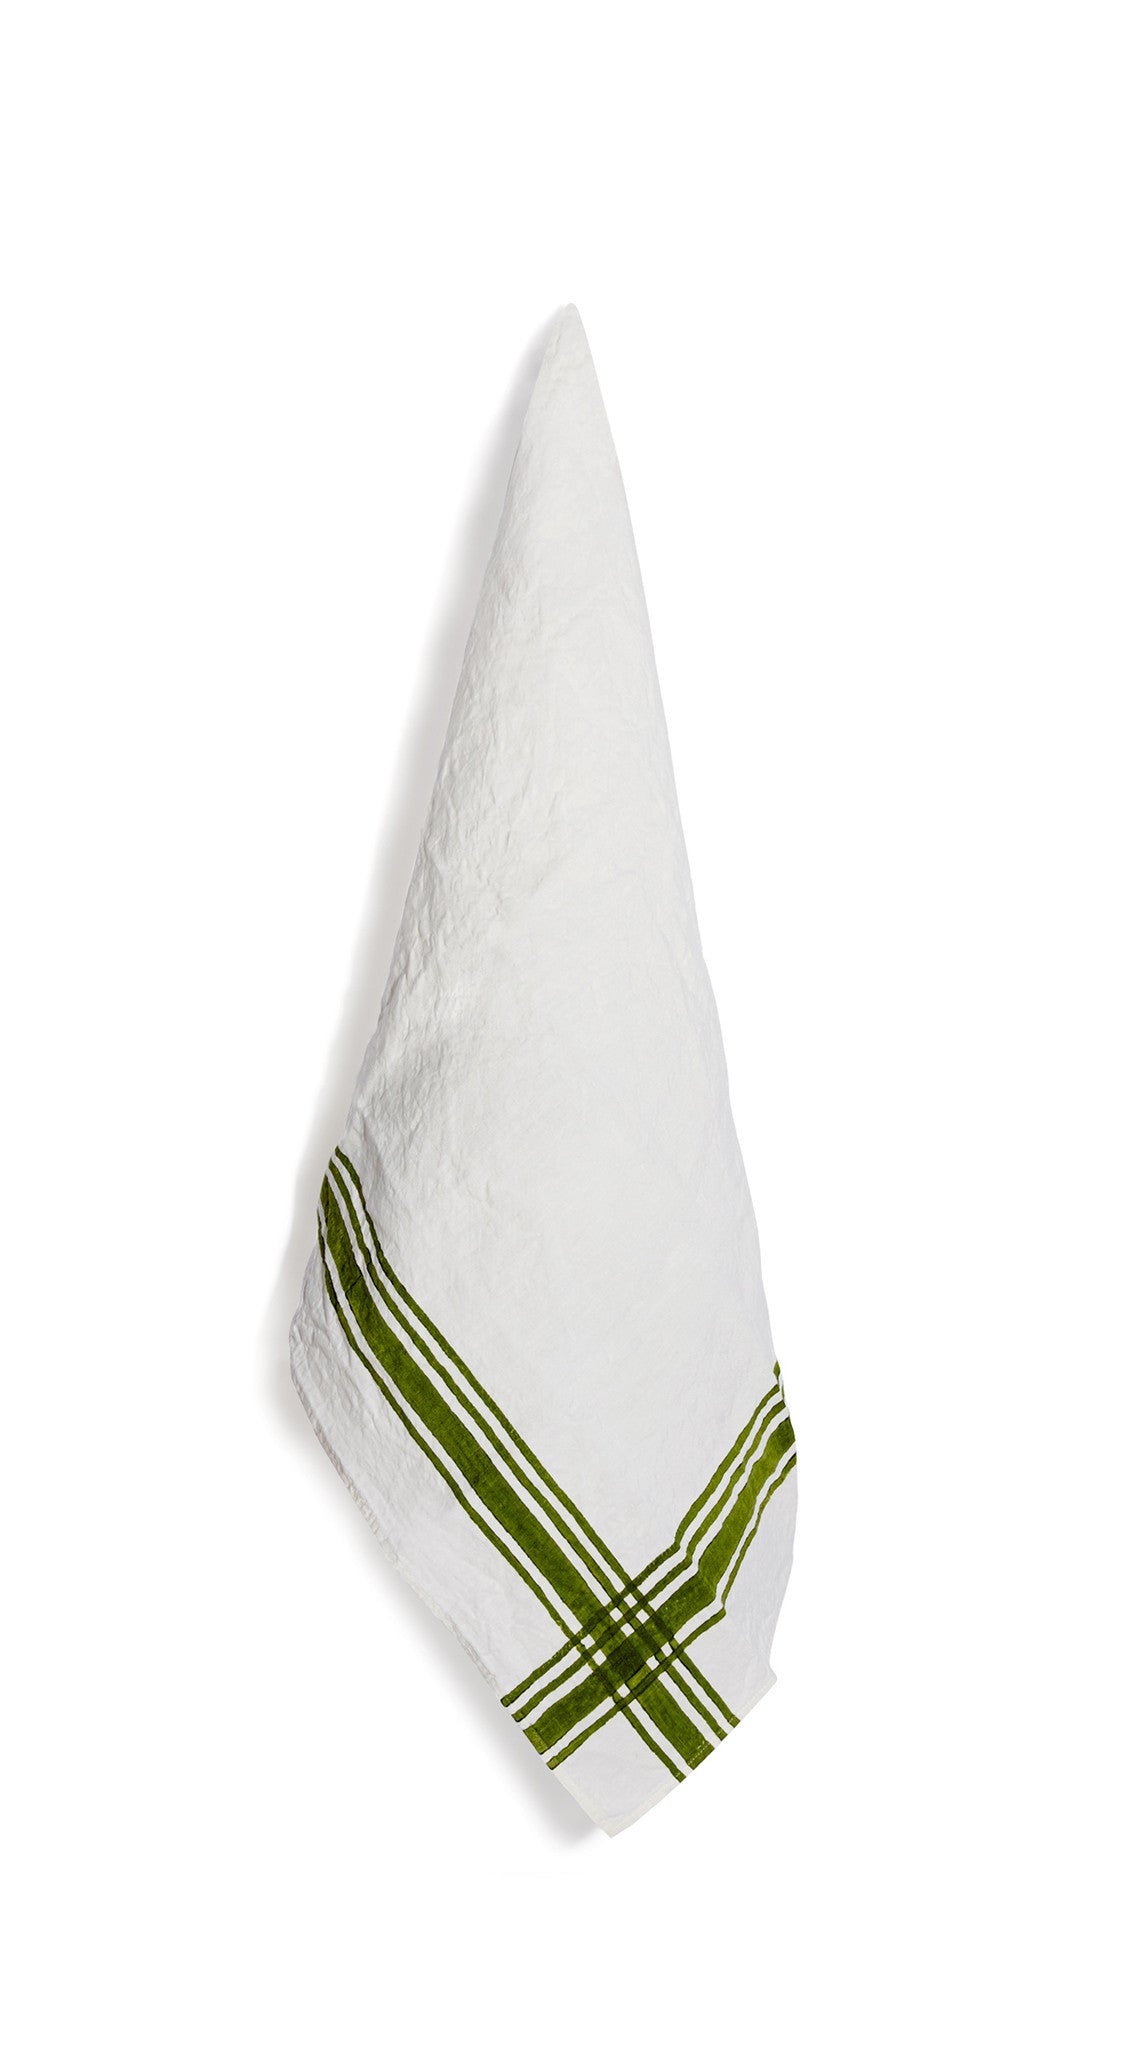 Stripe Linen Tea Towel in Avocado Green, 55x70cm